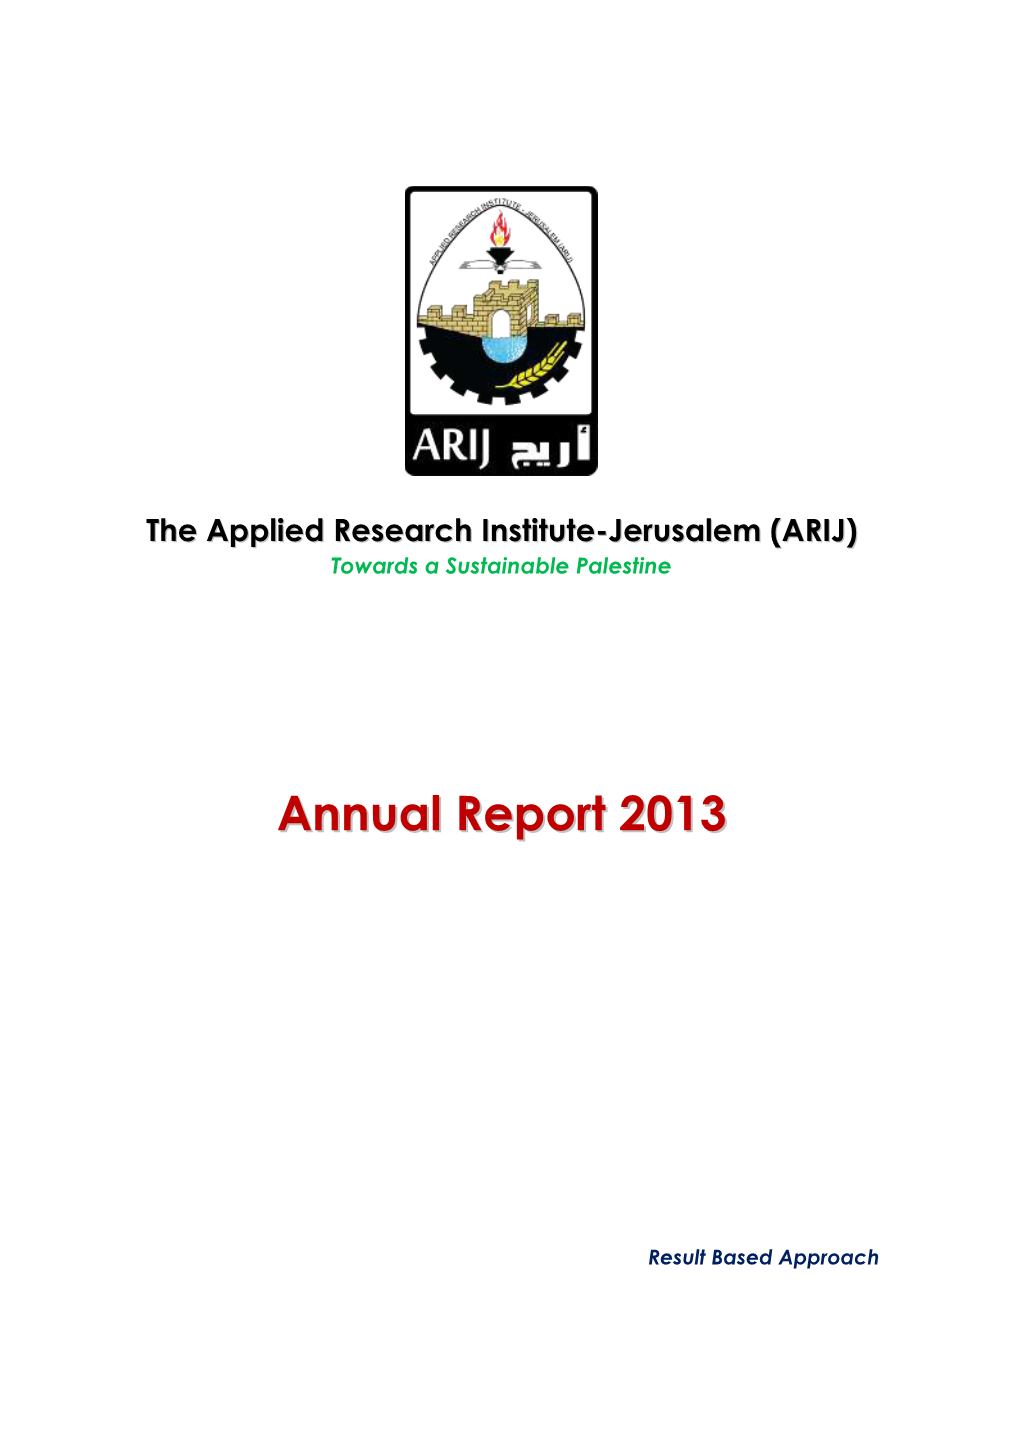 Annual Report 2013 in English